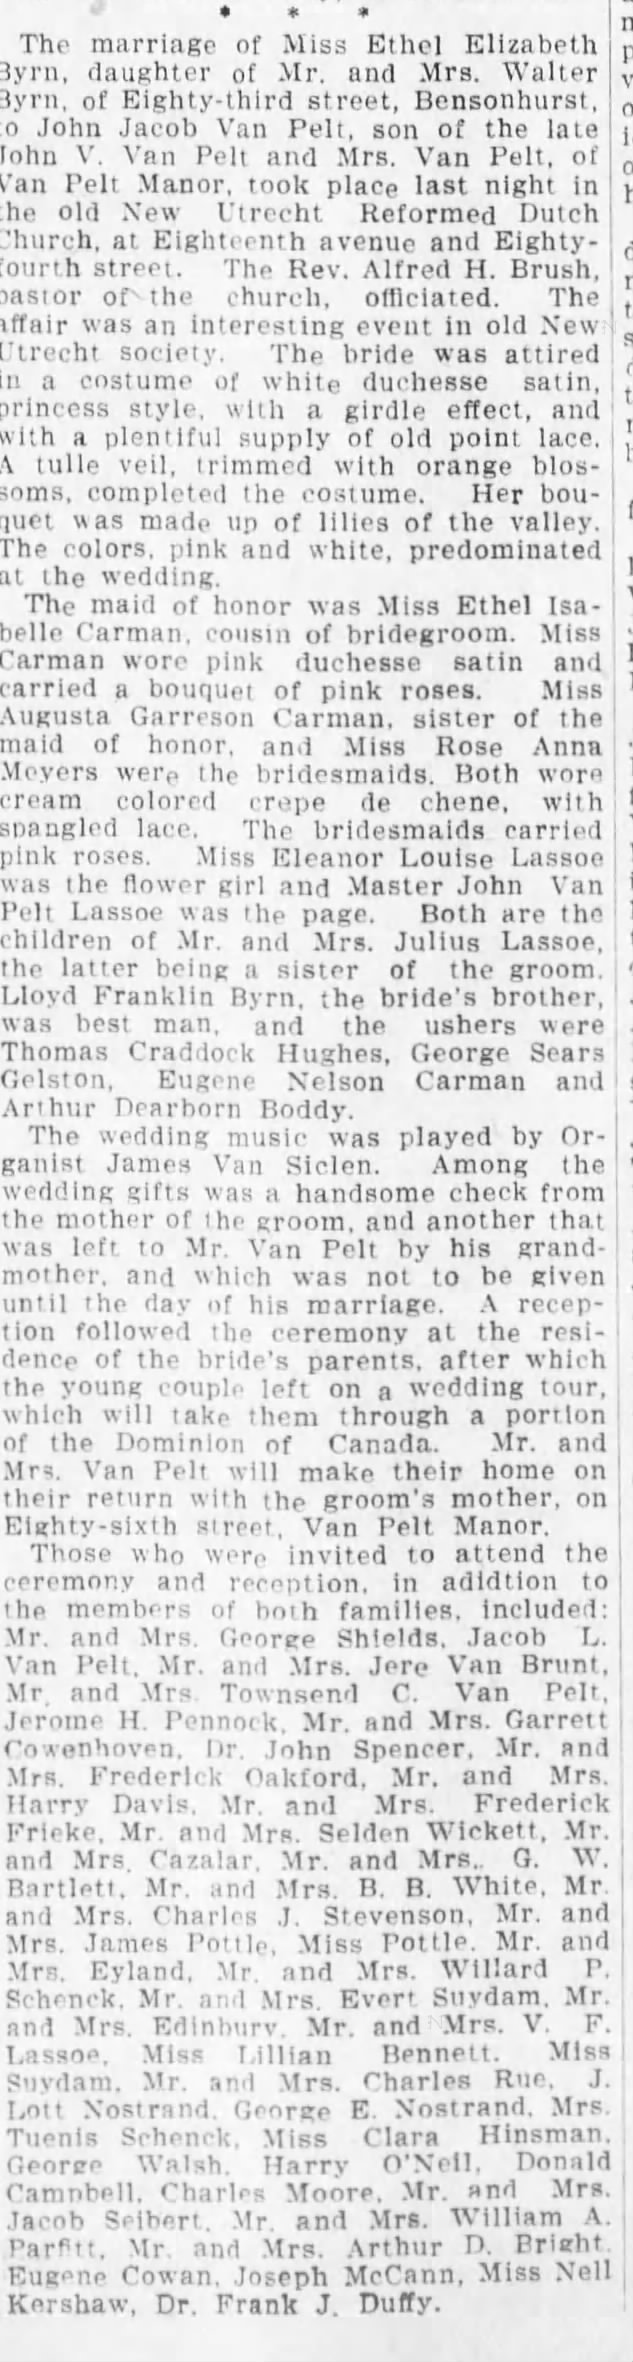 Wedding of Ethel Elizabeth Byrn and John Jacob Van Pelt, June 7, 1906.